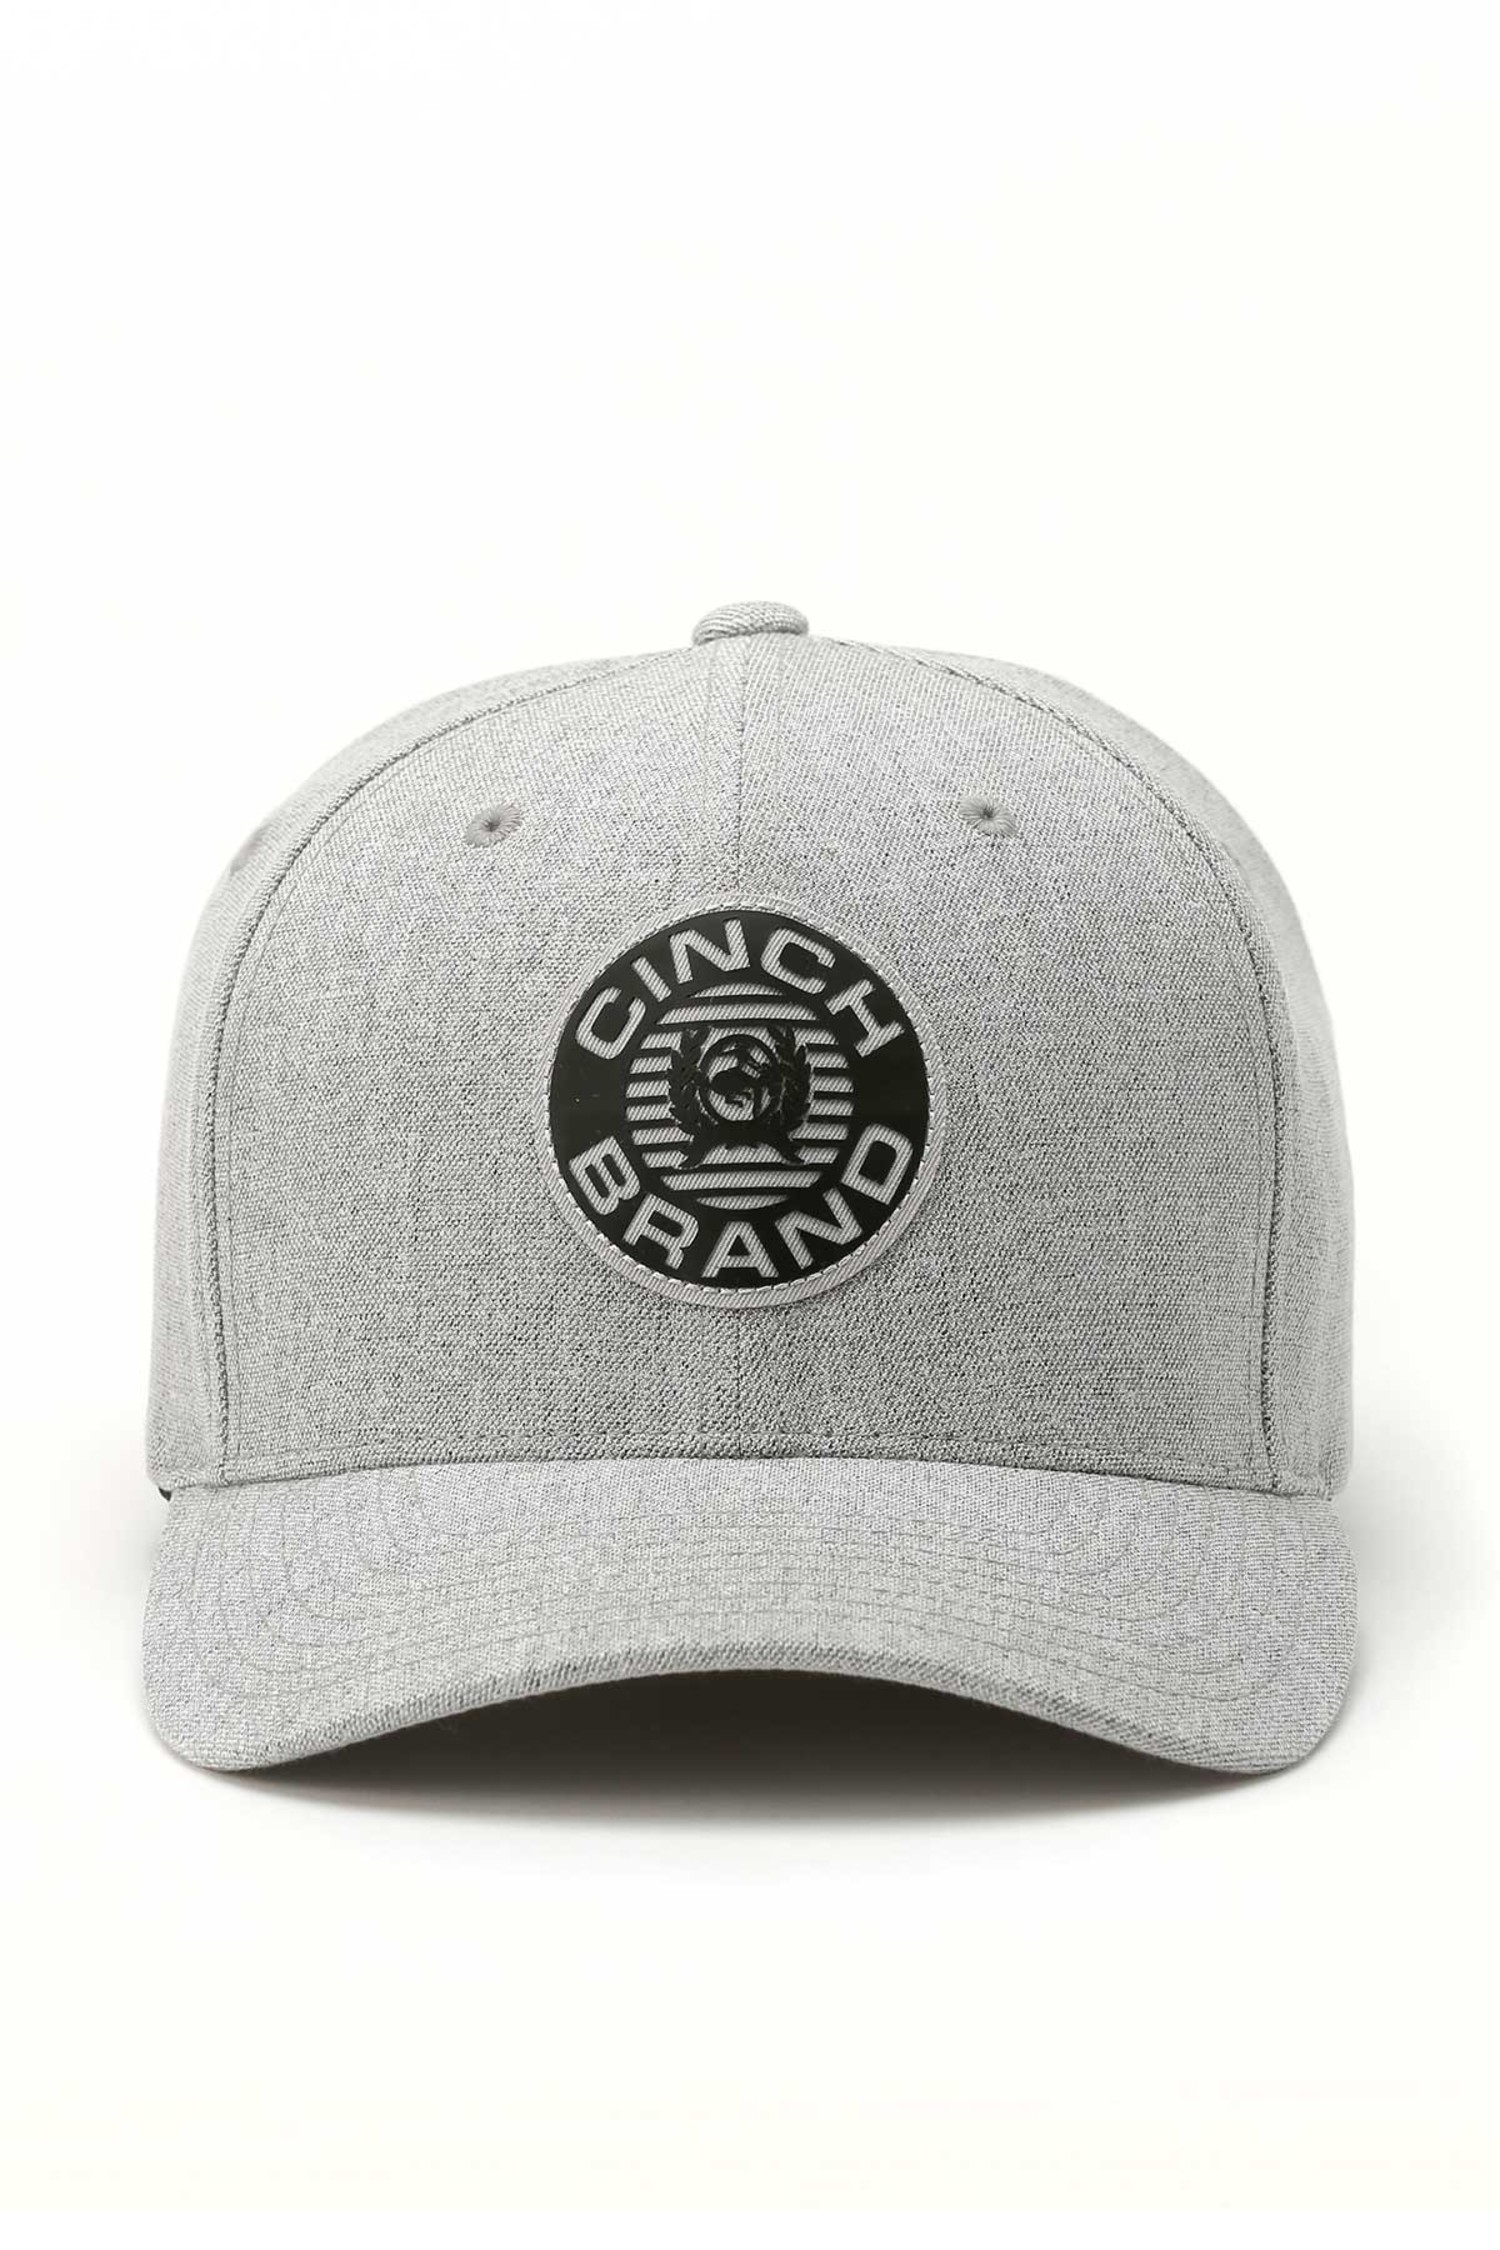 Grey Frontier Flexfit Shop Brand Western Cap - Cinch Heather Cinch